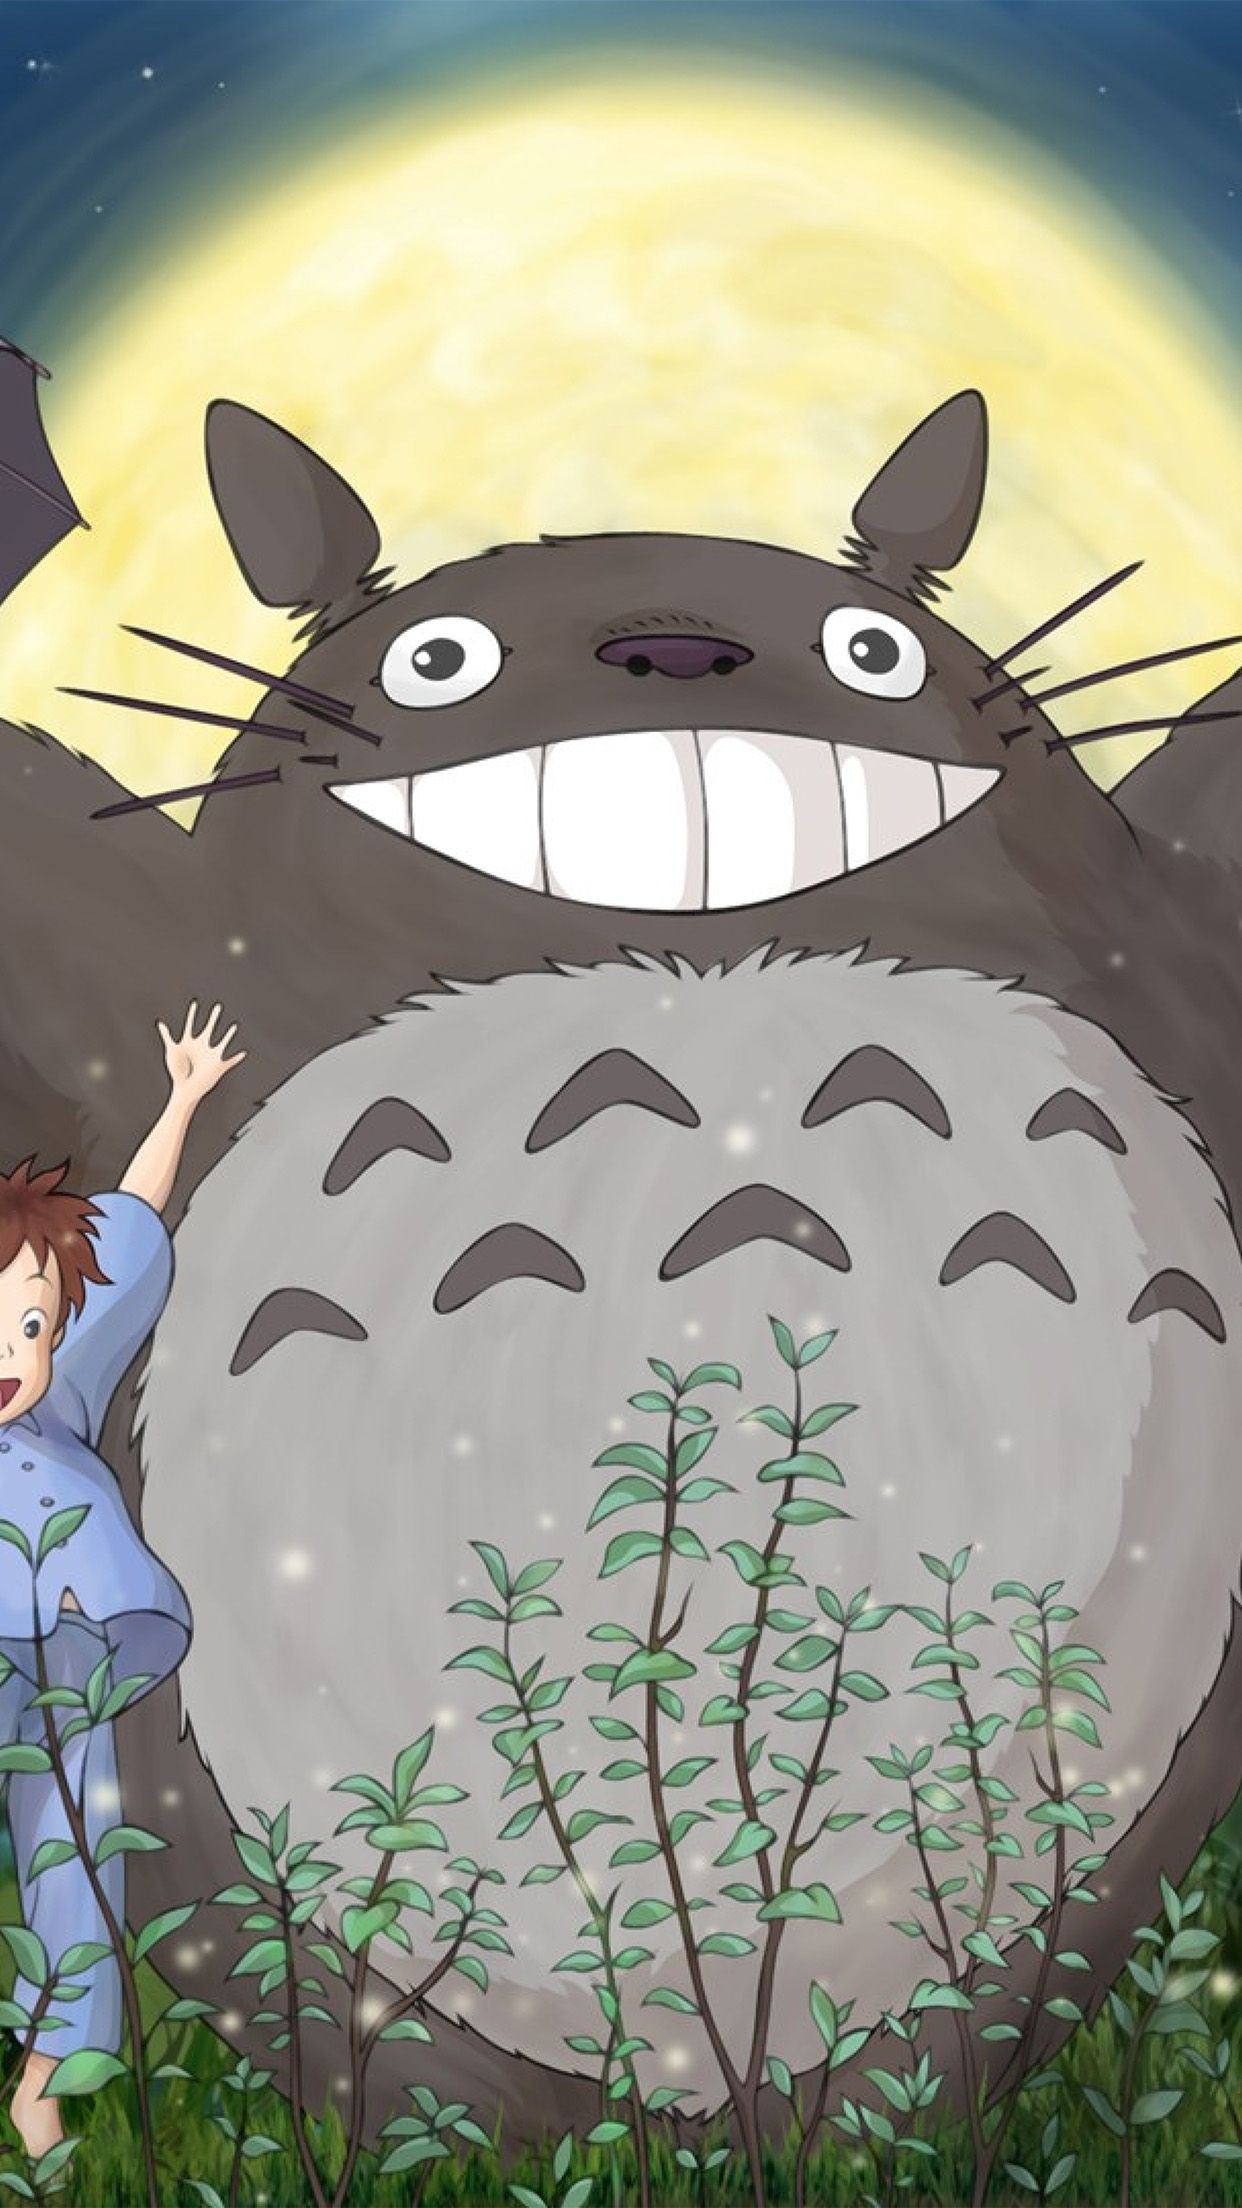 iPhone7 wallpaper. totoro forest anime cute illustration art